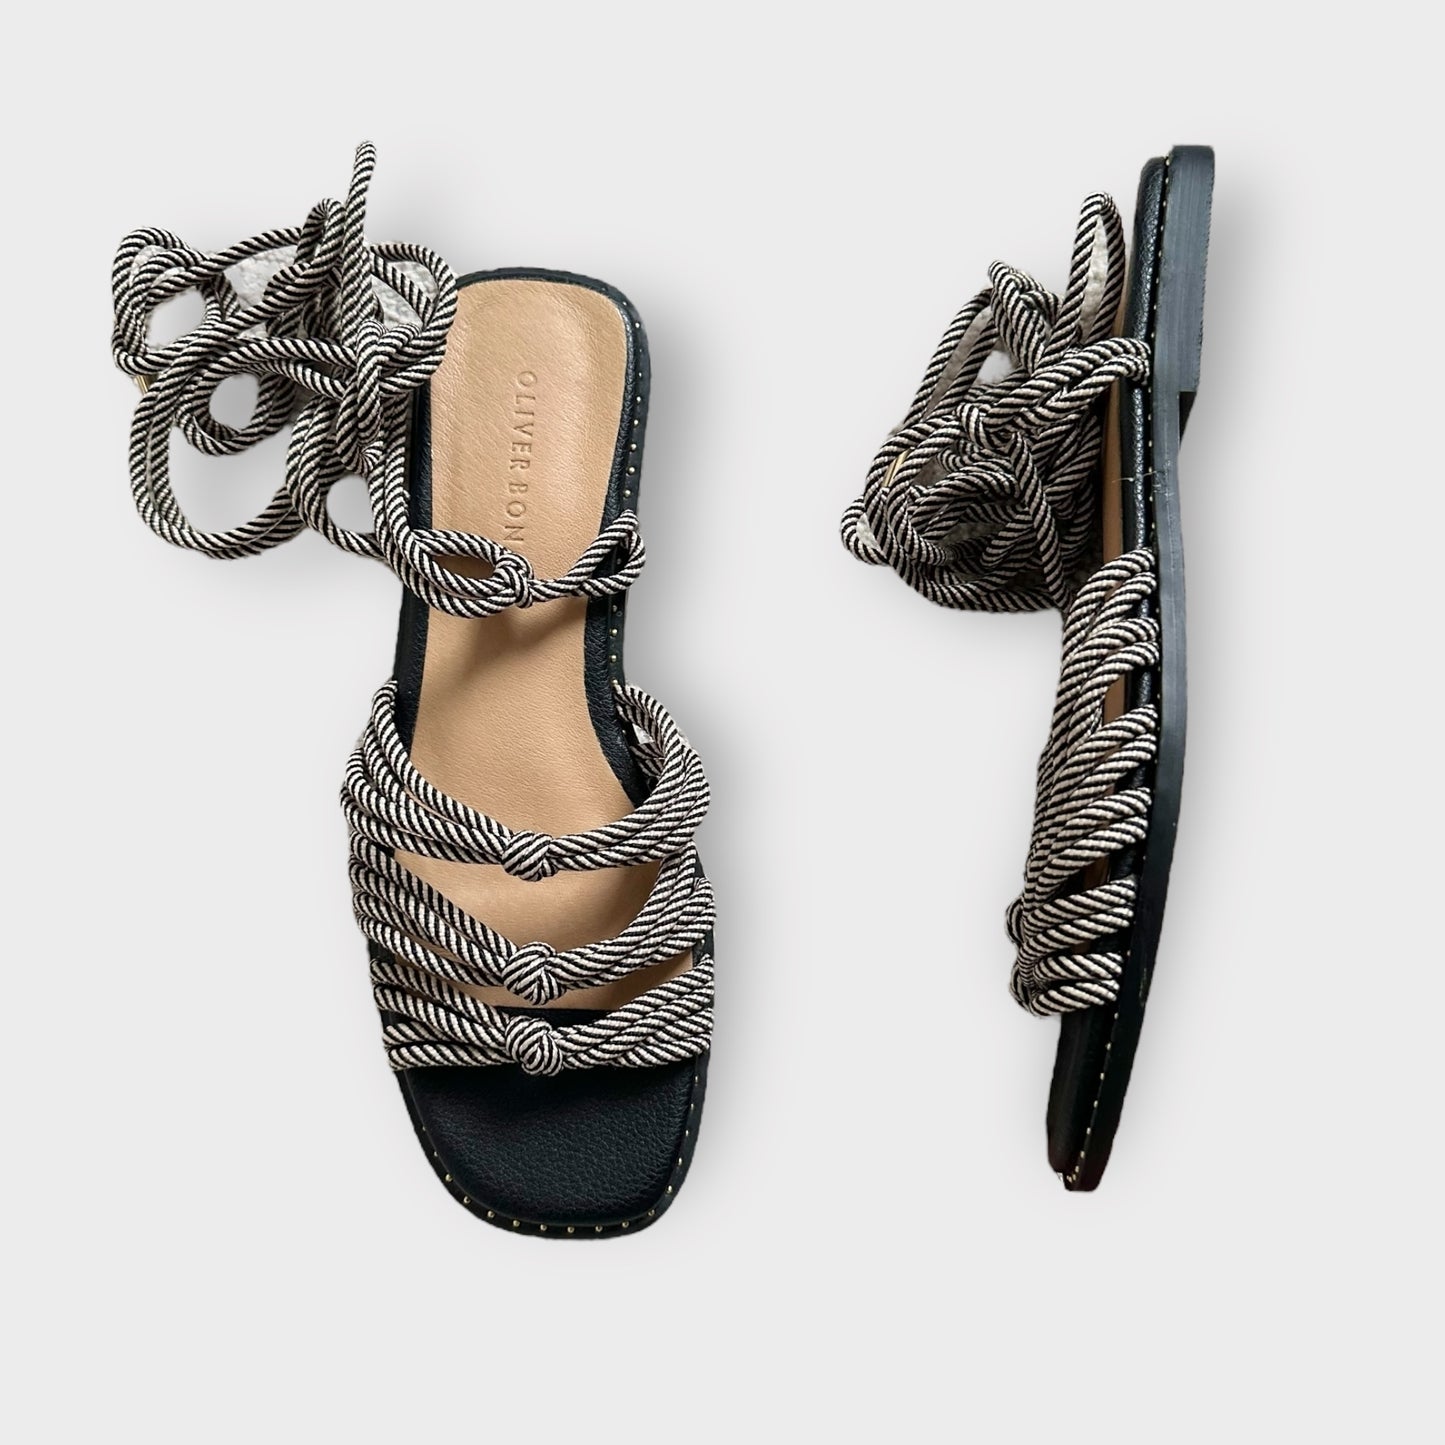 Oliver Bonas black white stripe knotted lace up sandals flipflops new EU 38 UK 5